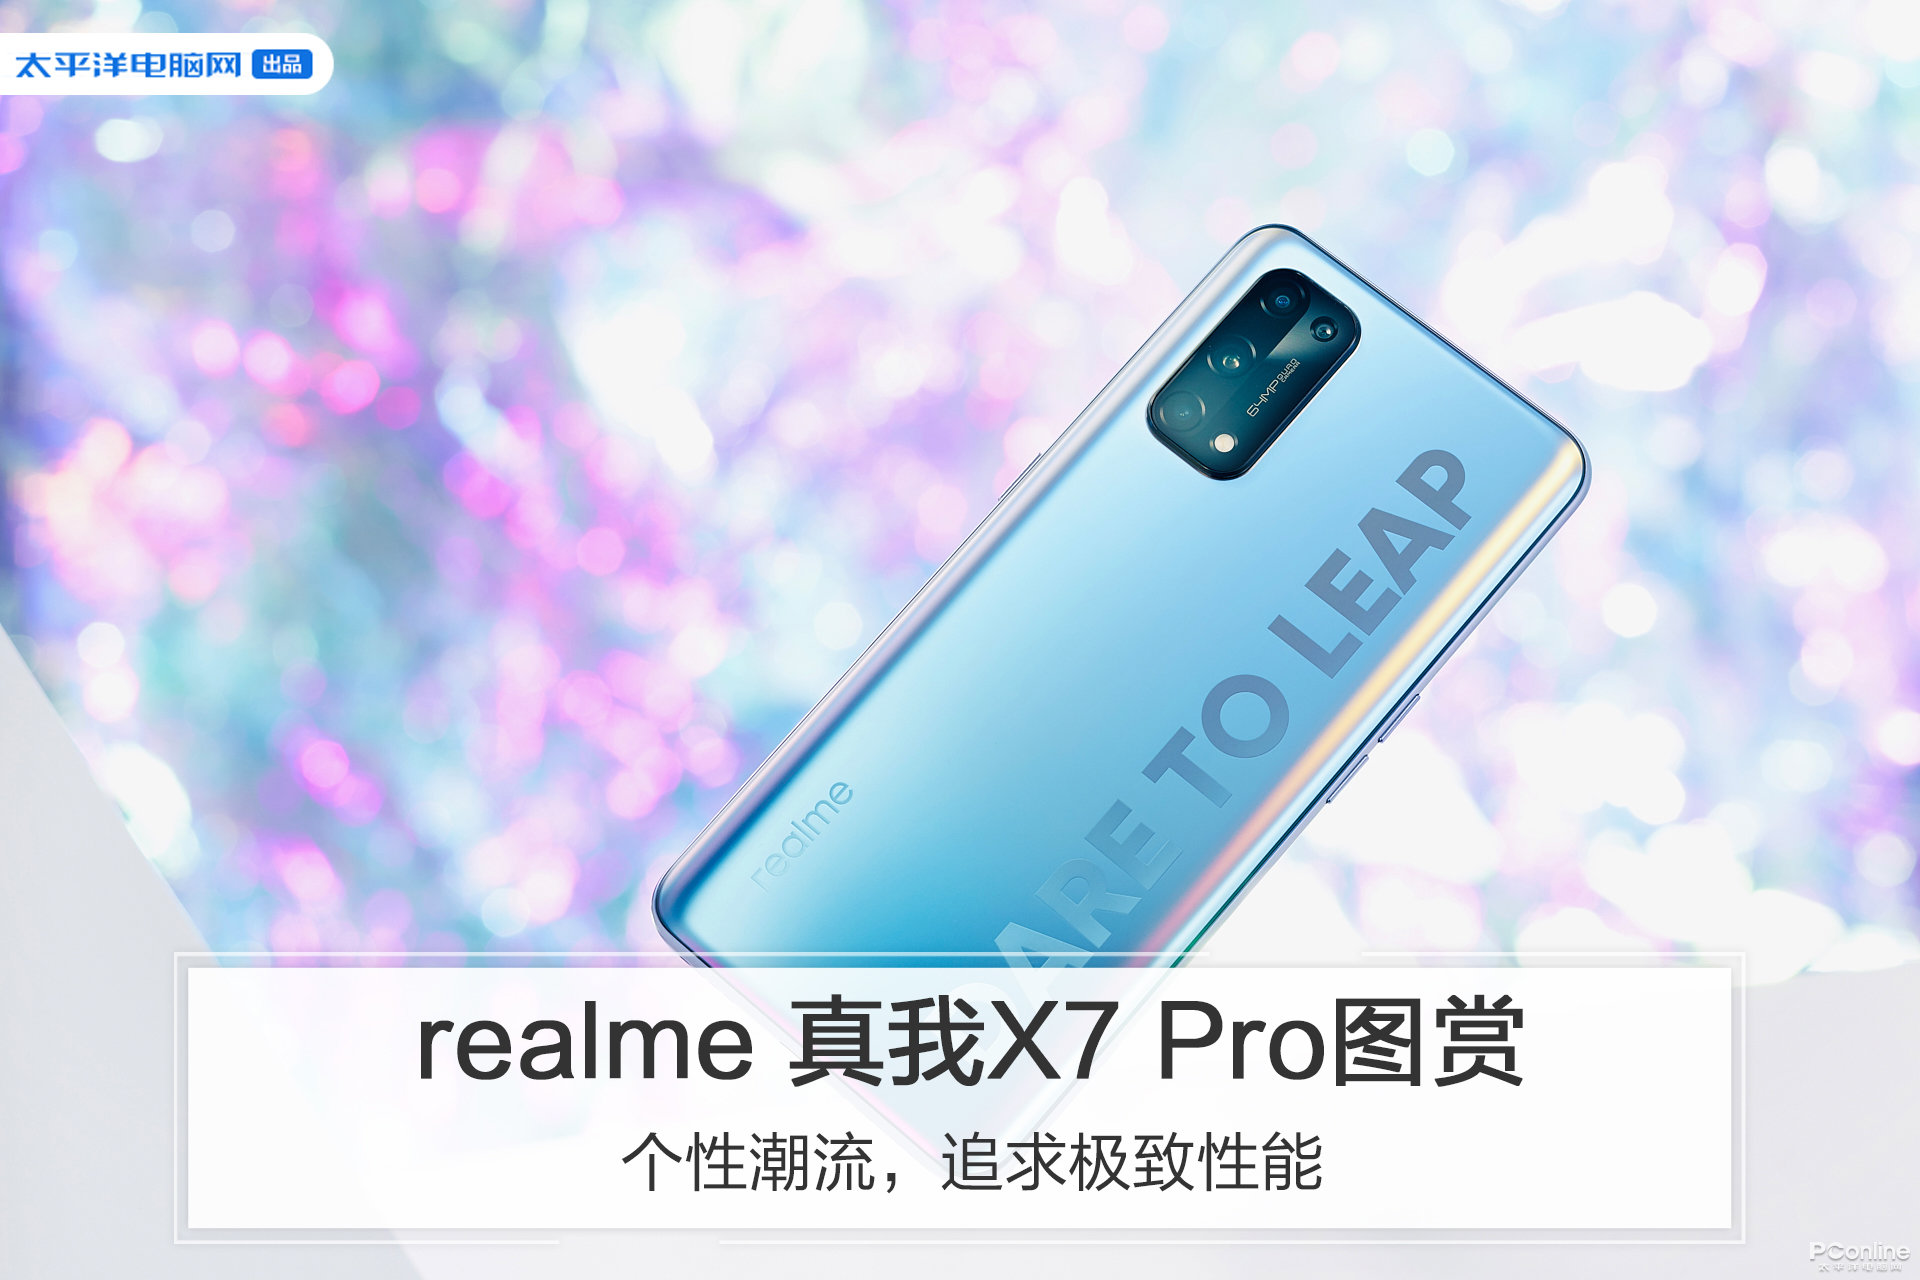 realme X7 Pro